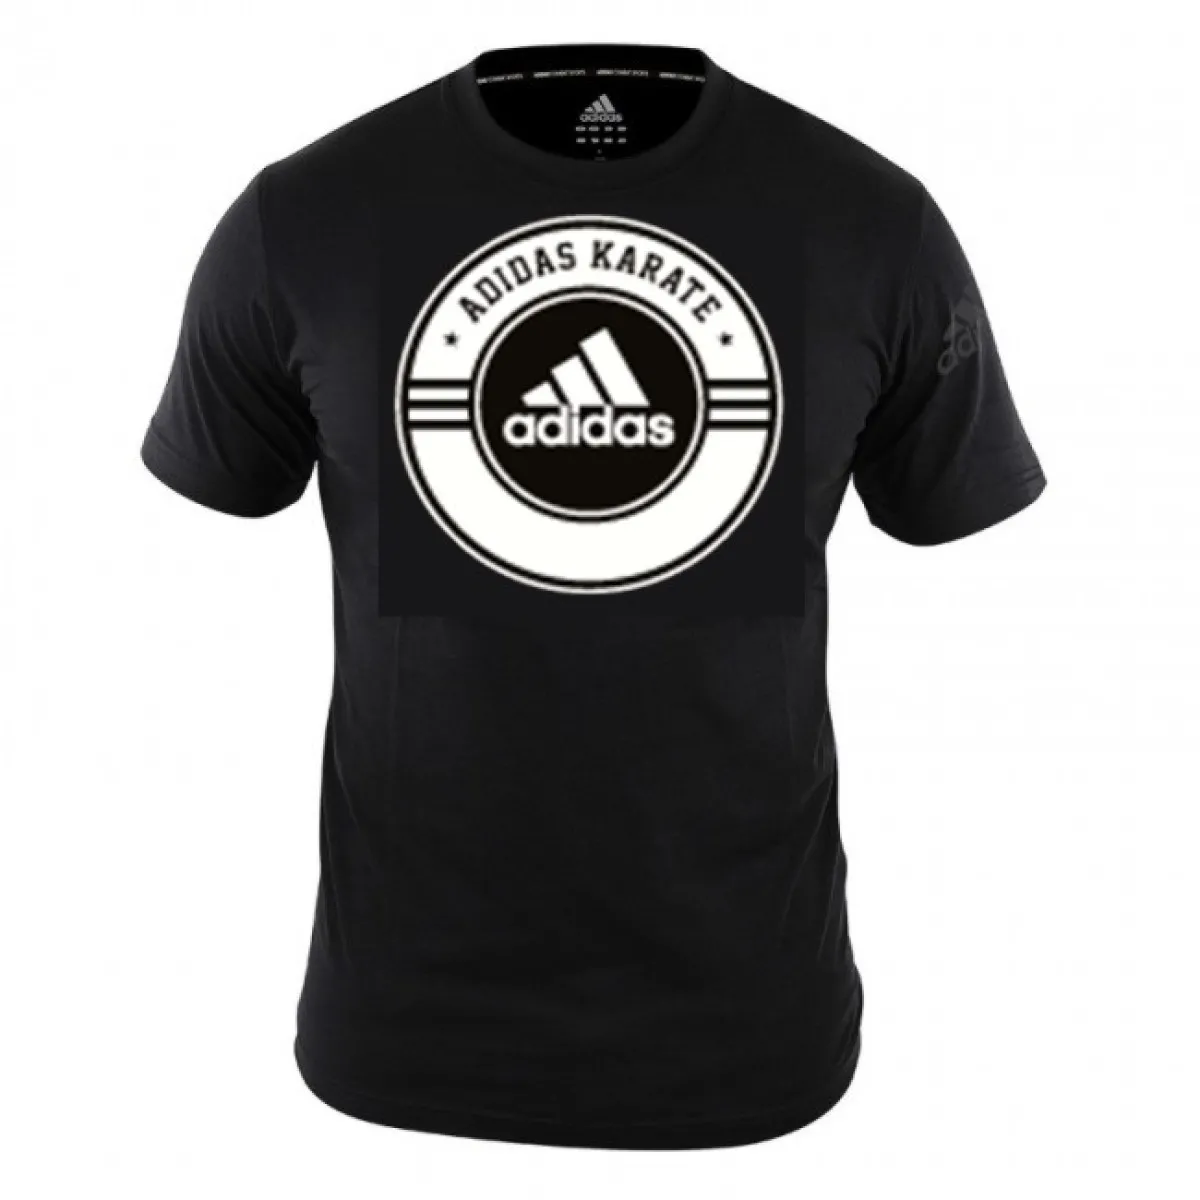 Camiseta adidas Combat Karate negra/blanca